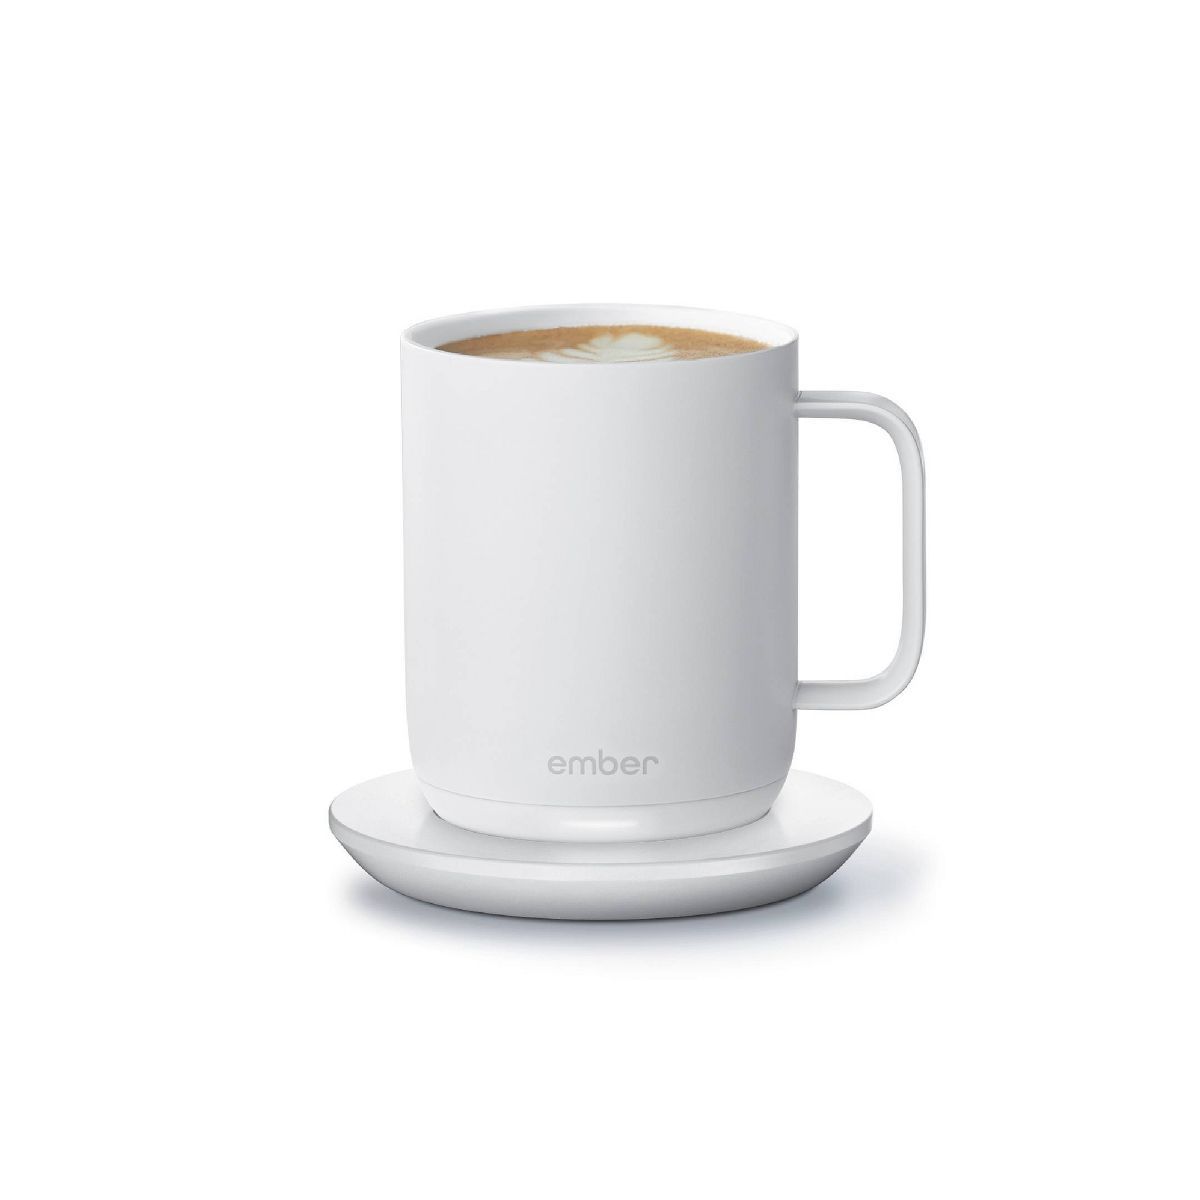 Ember Mug² Temperature Control Smart Mug 10oz | Target